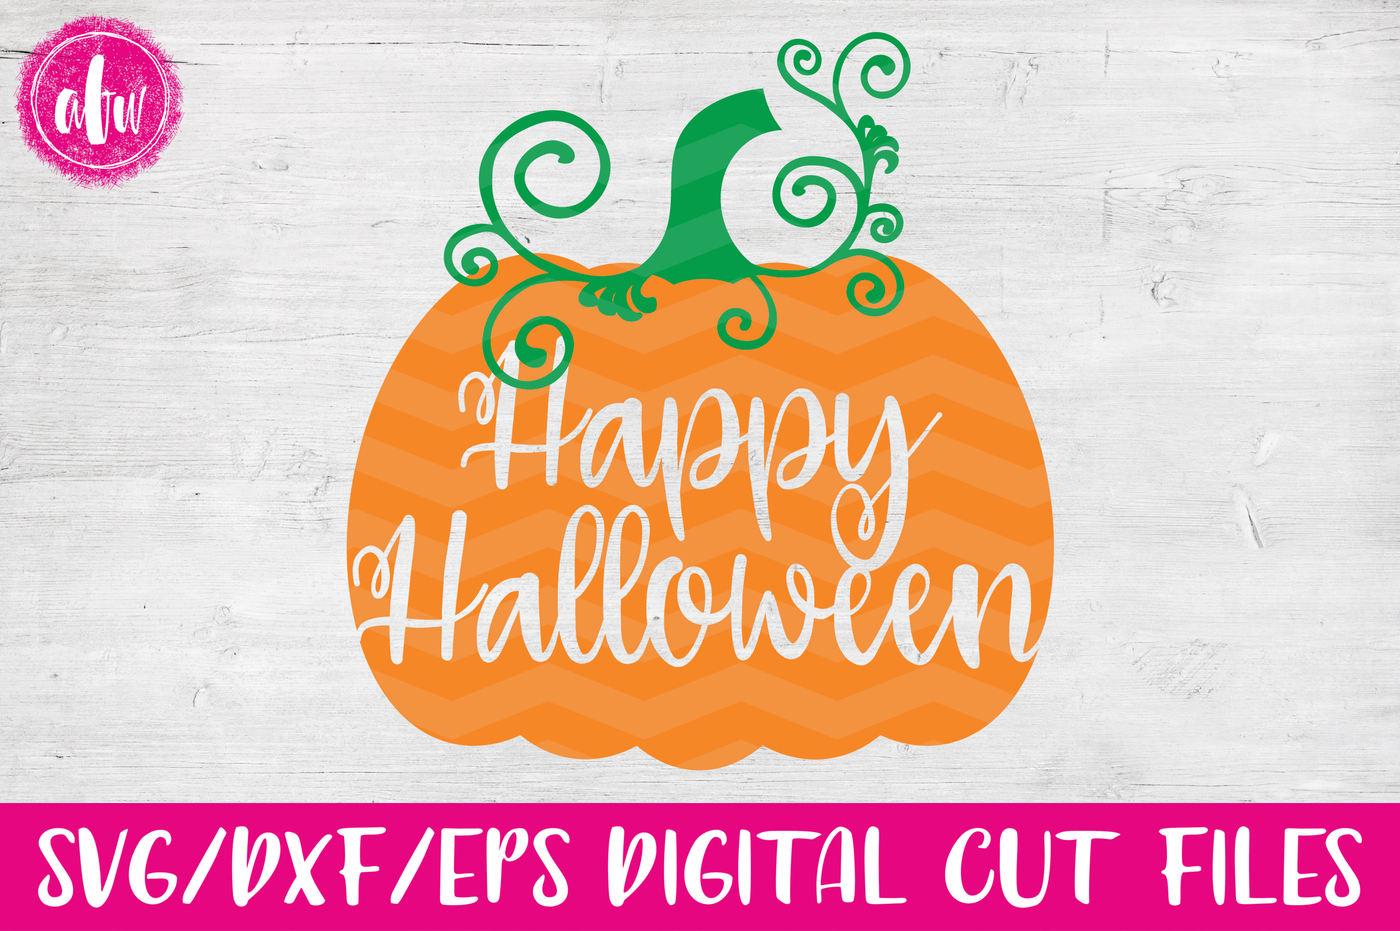 Happy Halloween Pumpkin Svg Dxf Eps Cut File By Afw Designs Thehungryjpeg Com